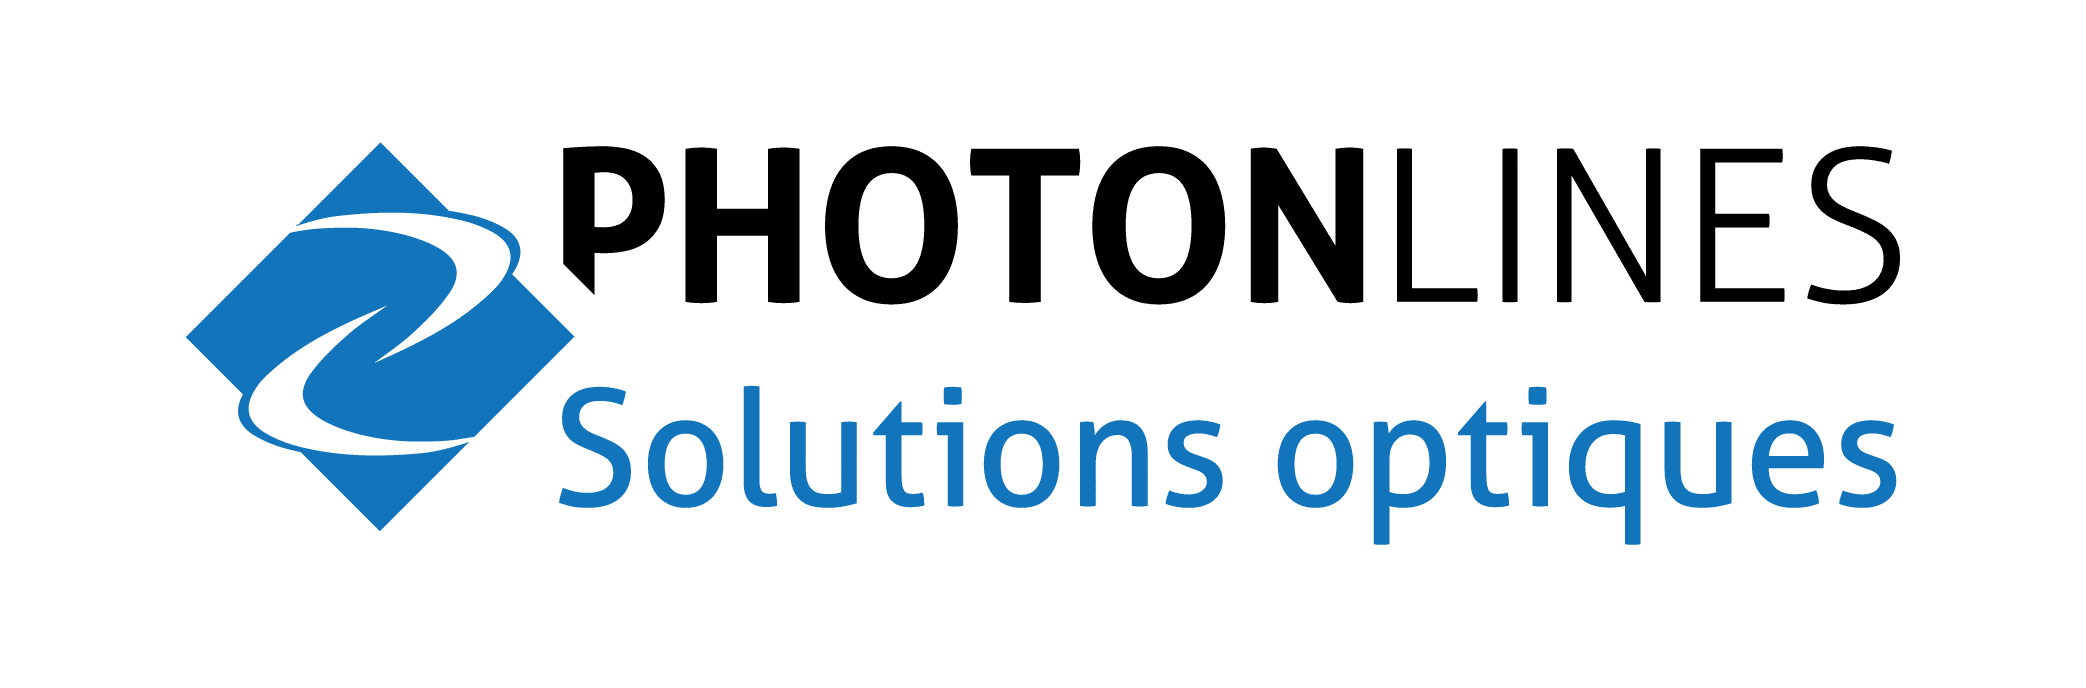 logo-photonlines-solutions-optiques-1